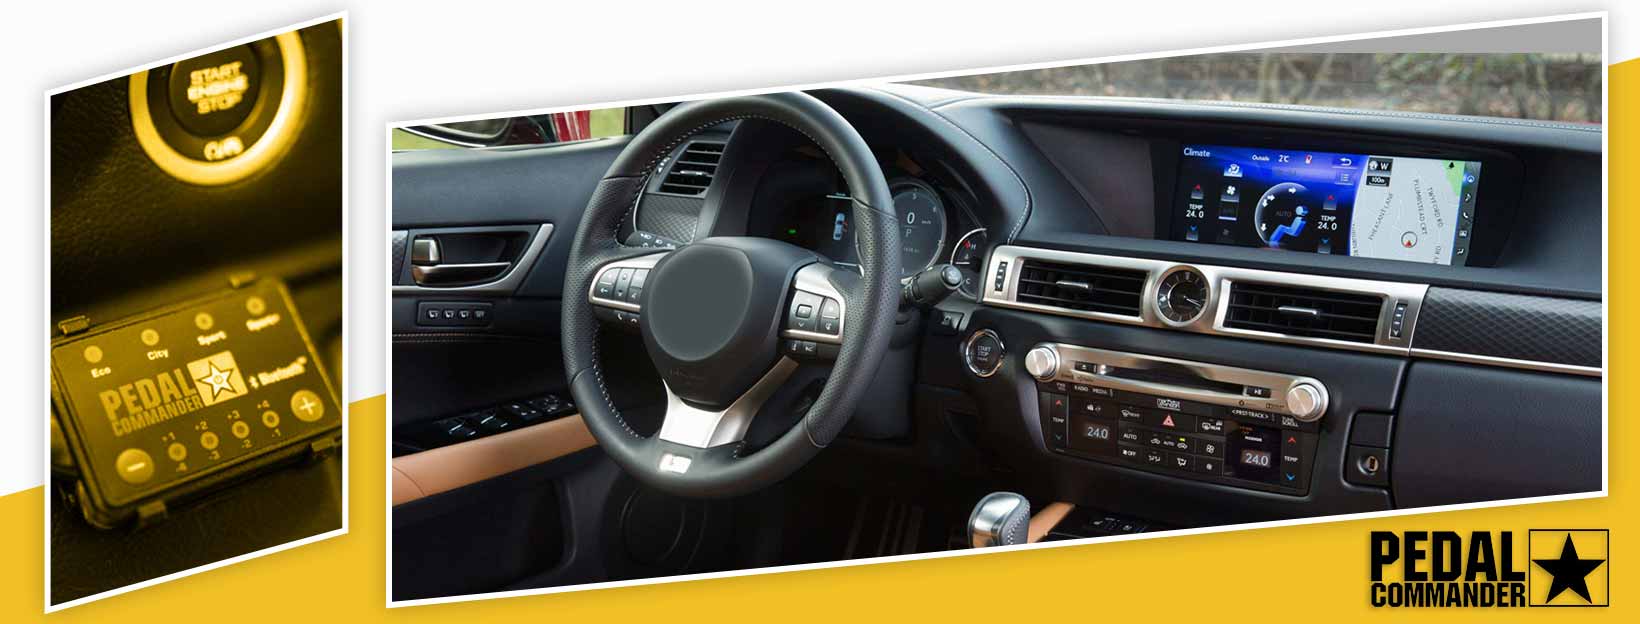 Pedal Commander for Lexus GS - interior